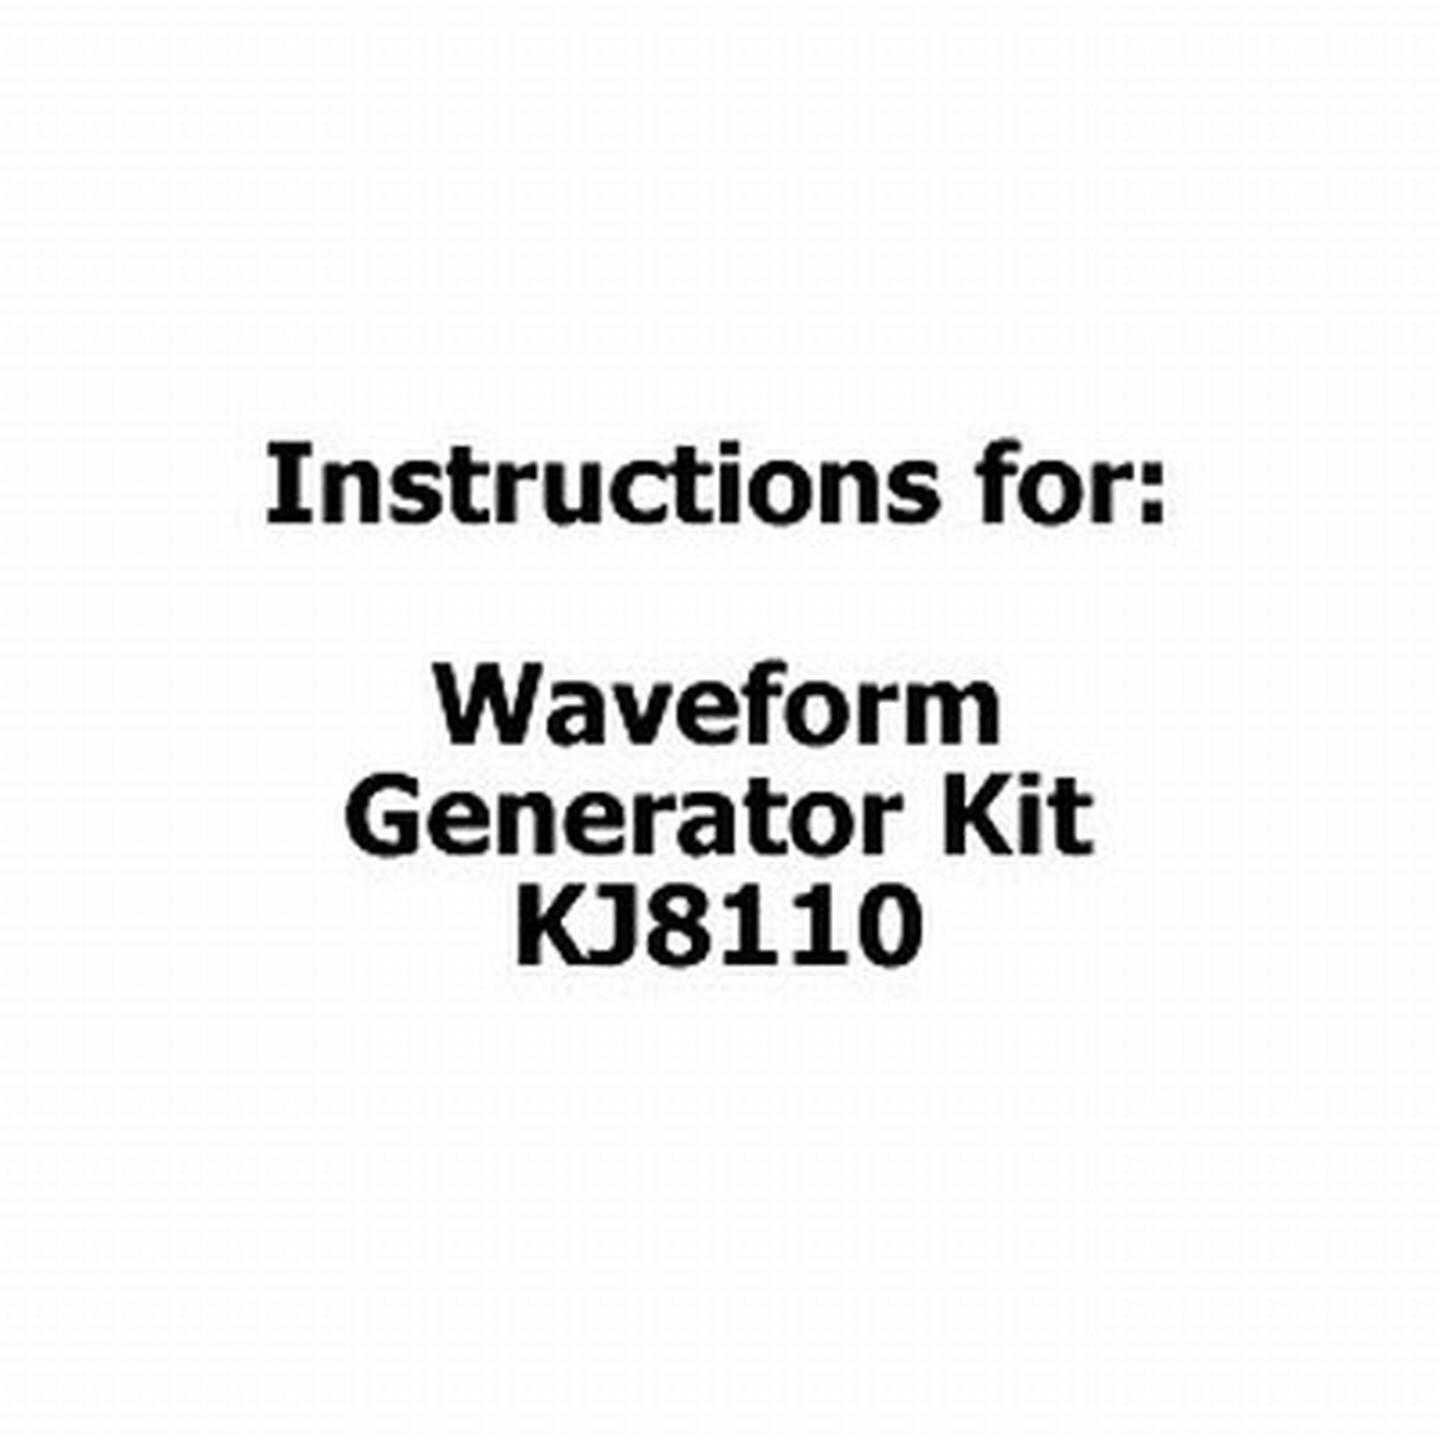 Instructions for Waveform Generator Kit - KJ8110